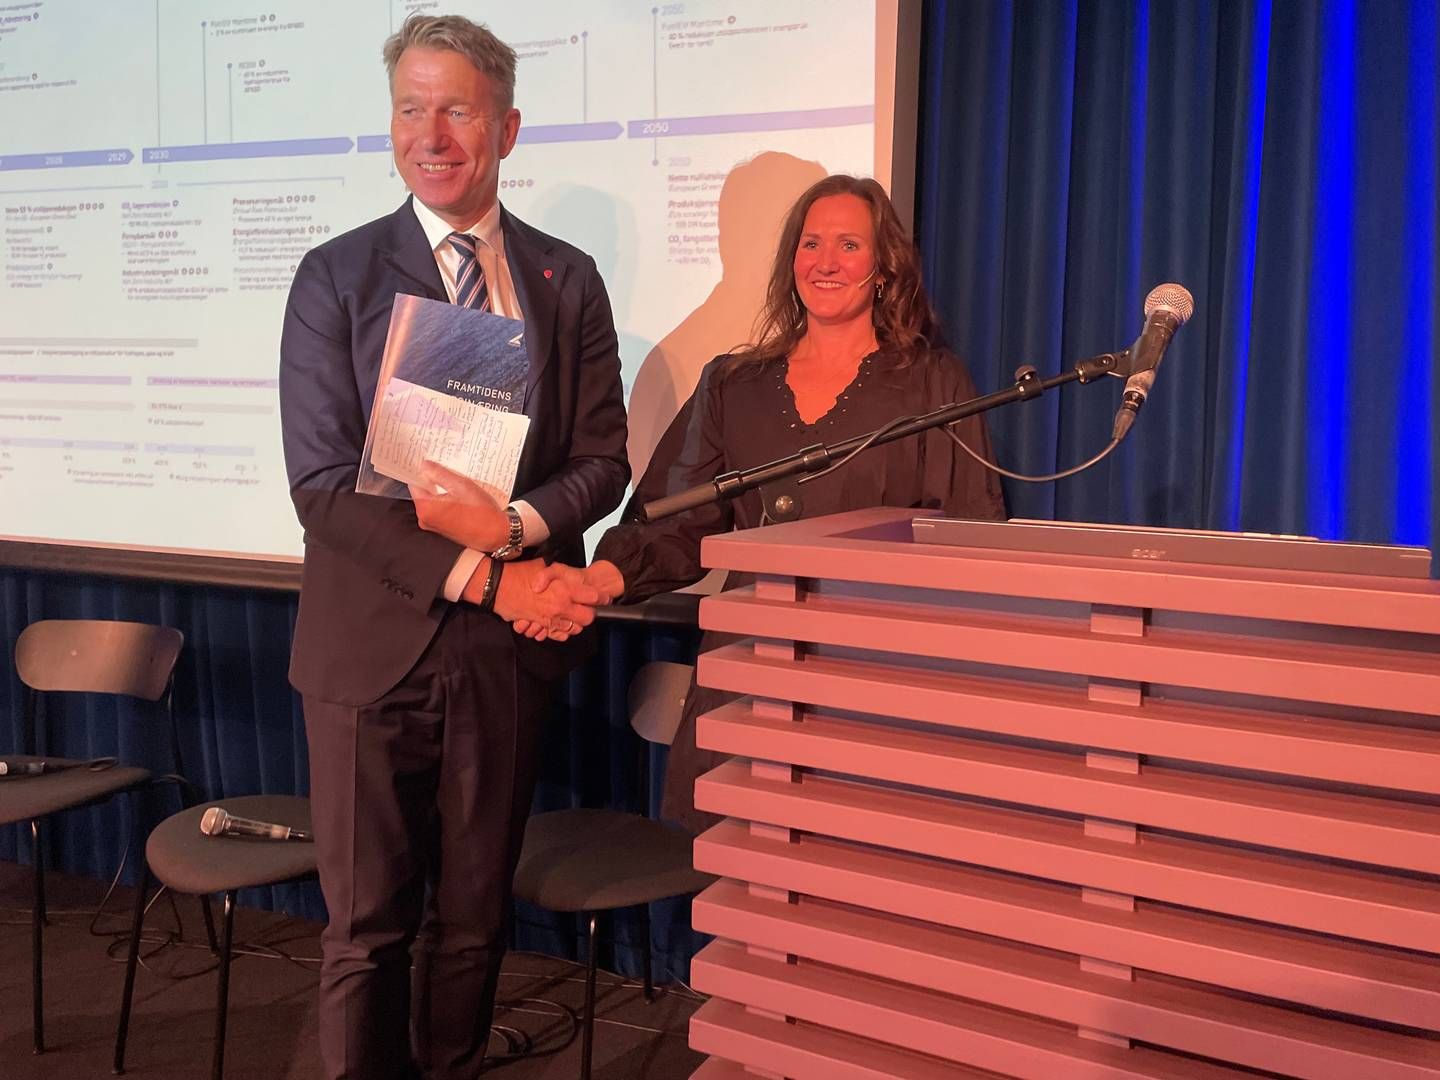 Her er Aasland sammen med Benedicte Solaas fra Offshore Norge. Solaas presenterte den fjerde statusrapporten for Konkrafts klimaplan, som først ble lansert i 2020. | Foto: Harald Amdal/EnergiWatch